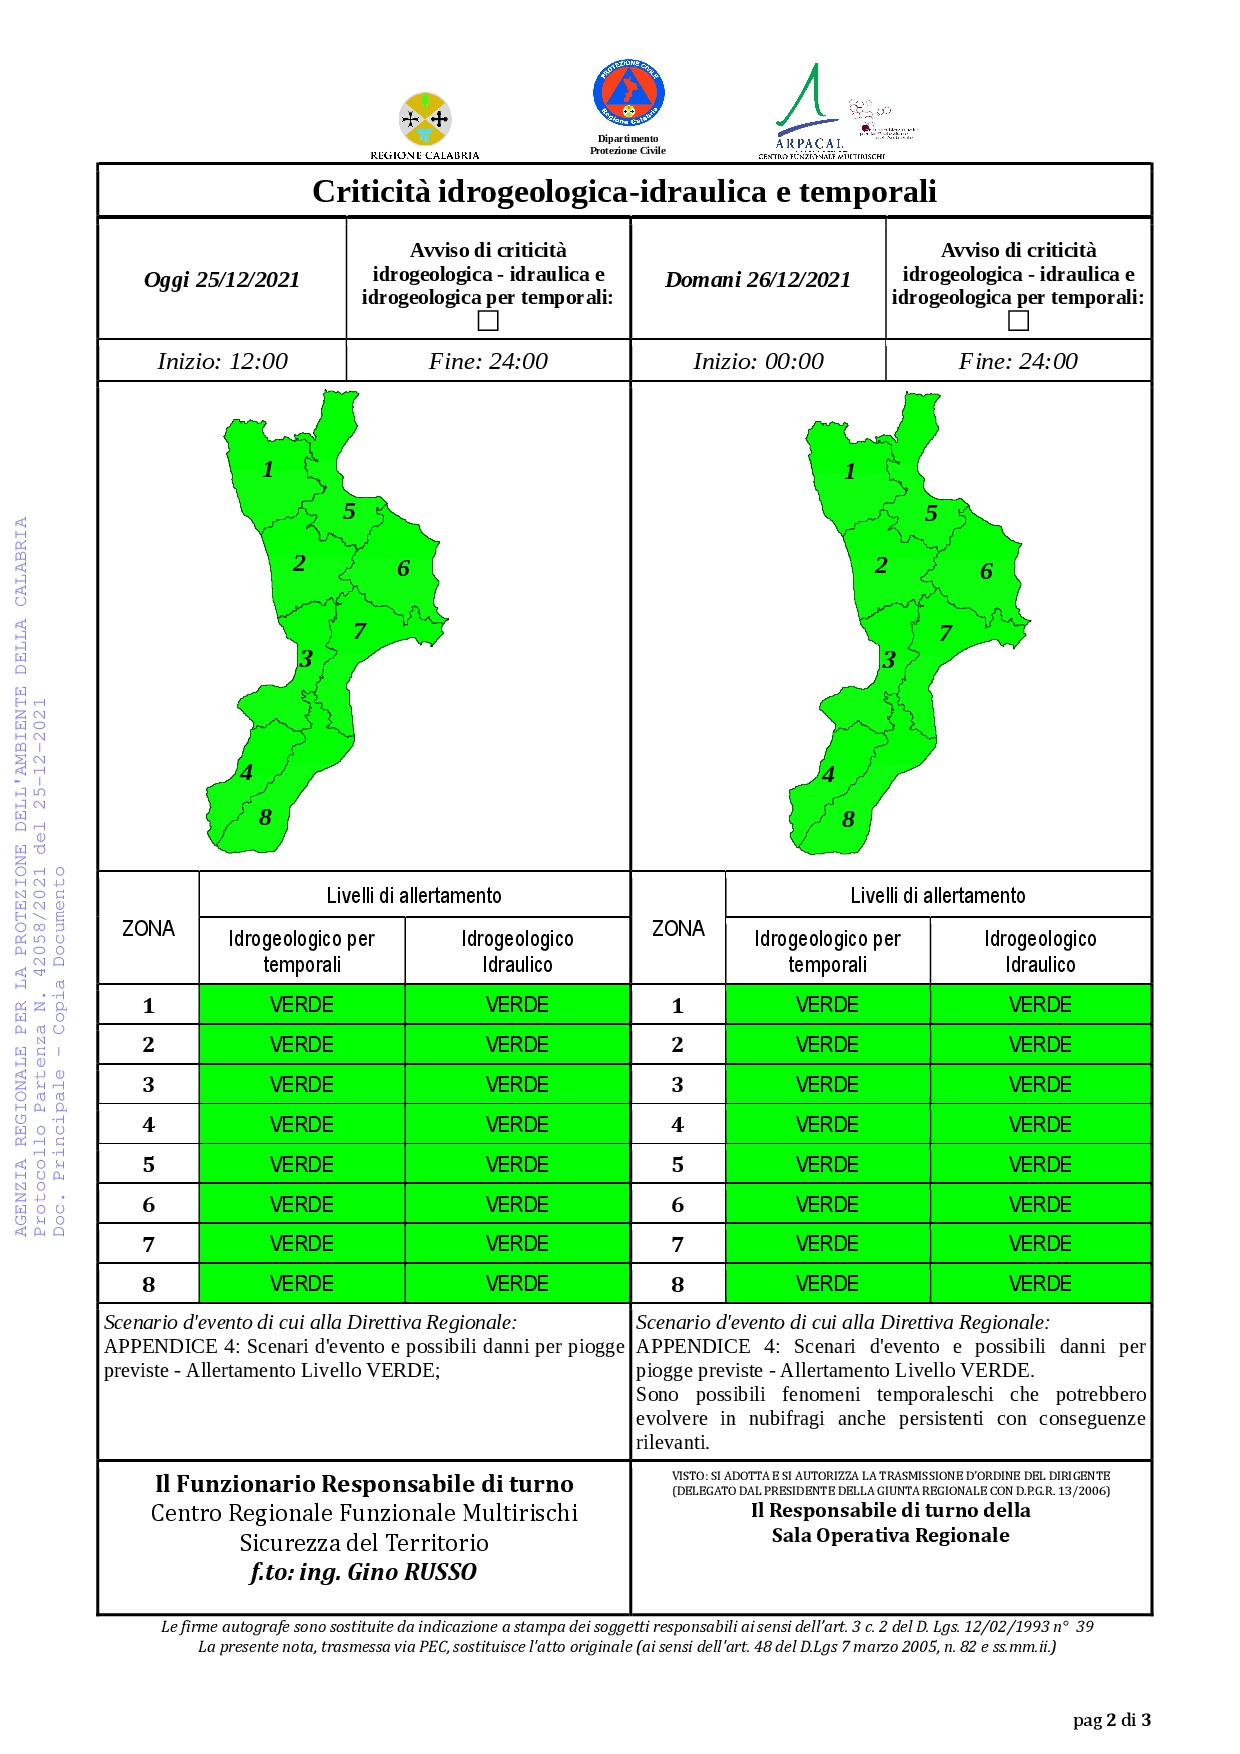 Criticità idrogeologica-idraulica e temporali in Calabria 25-12-2021